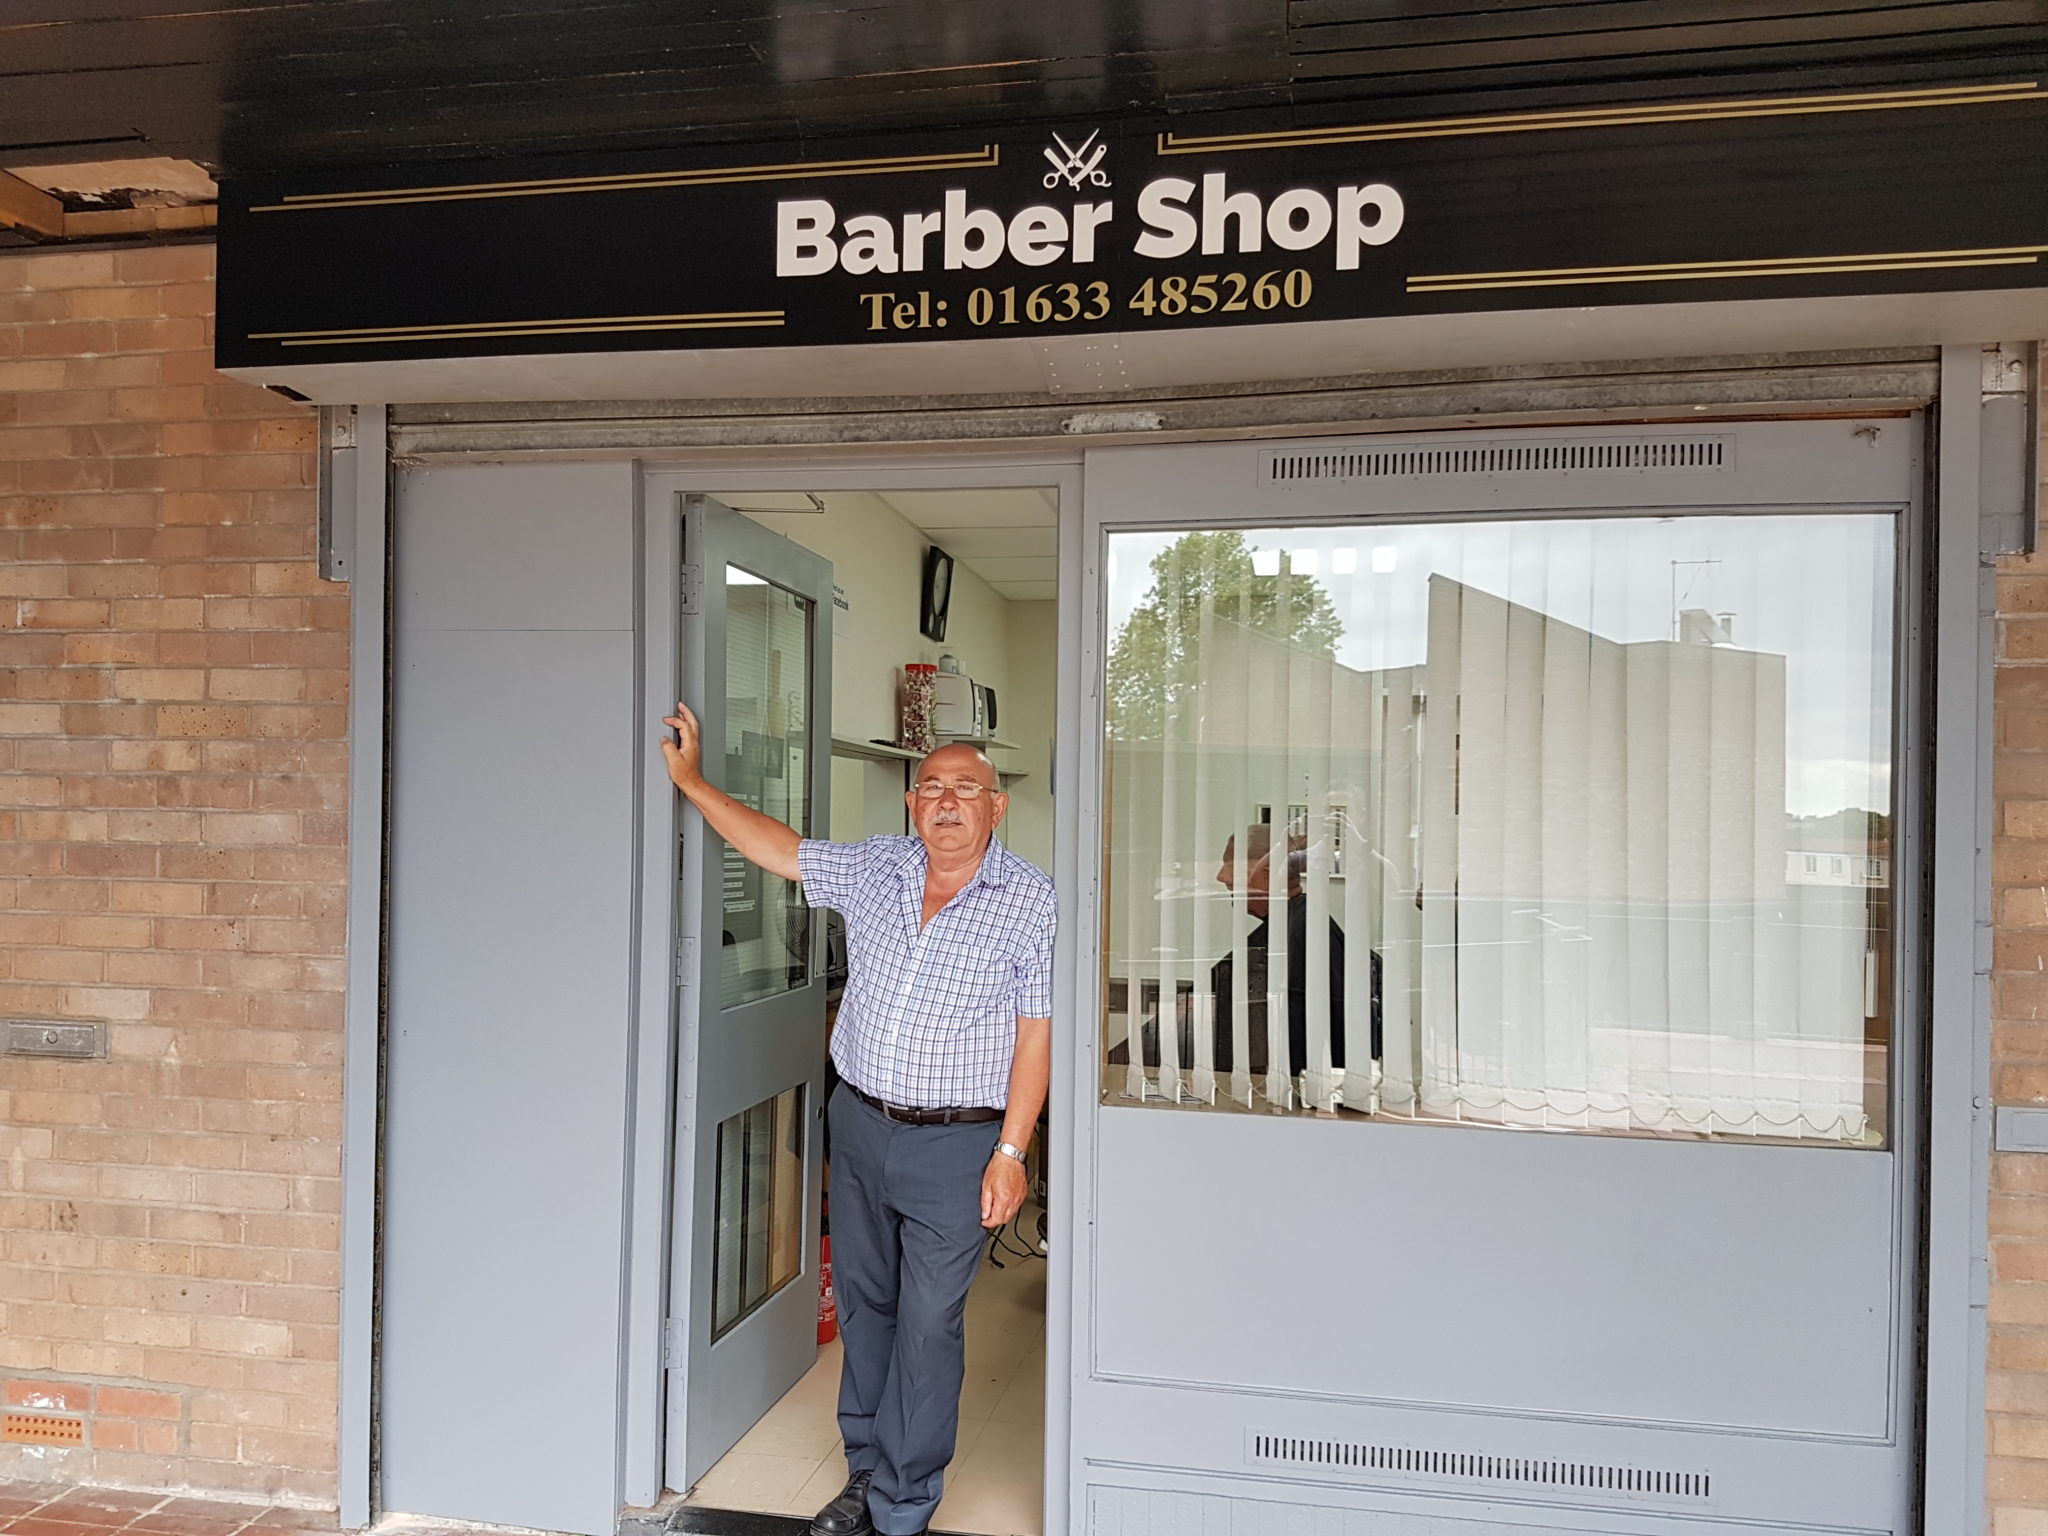 Joe Vecchio, a barber in Fairwater Shops in Cwmbran